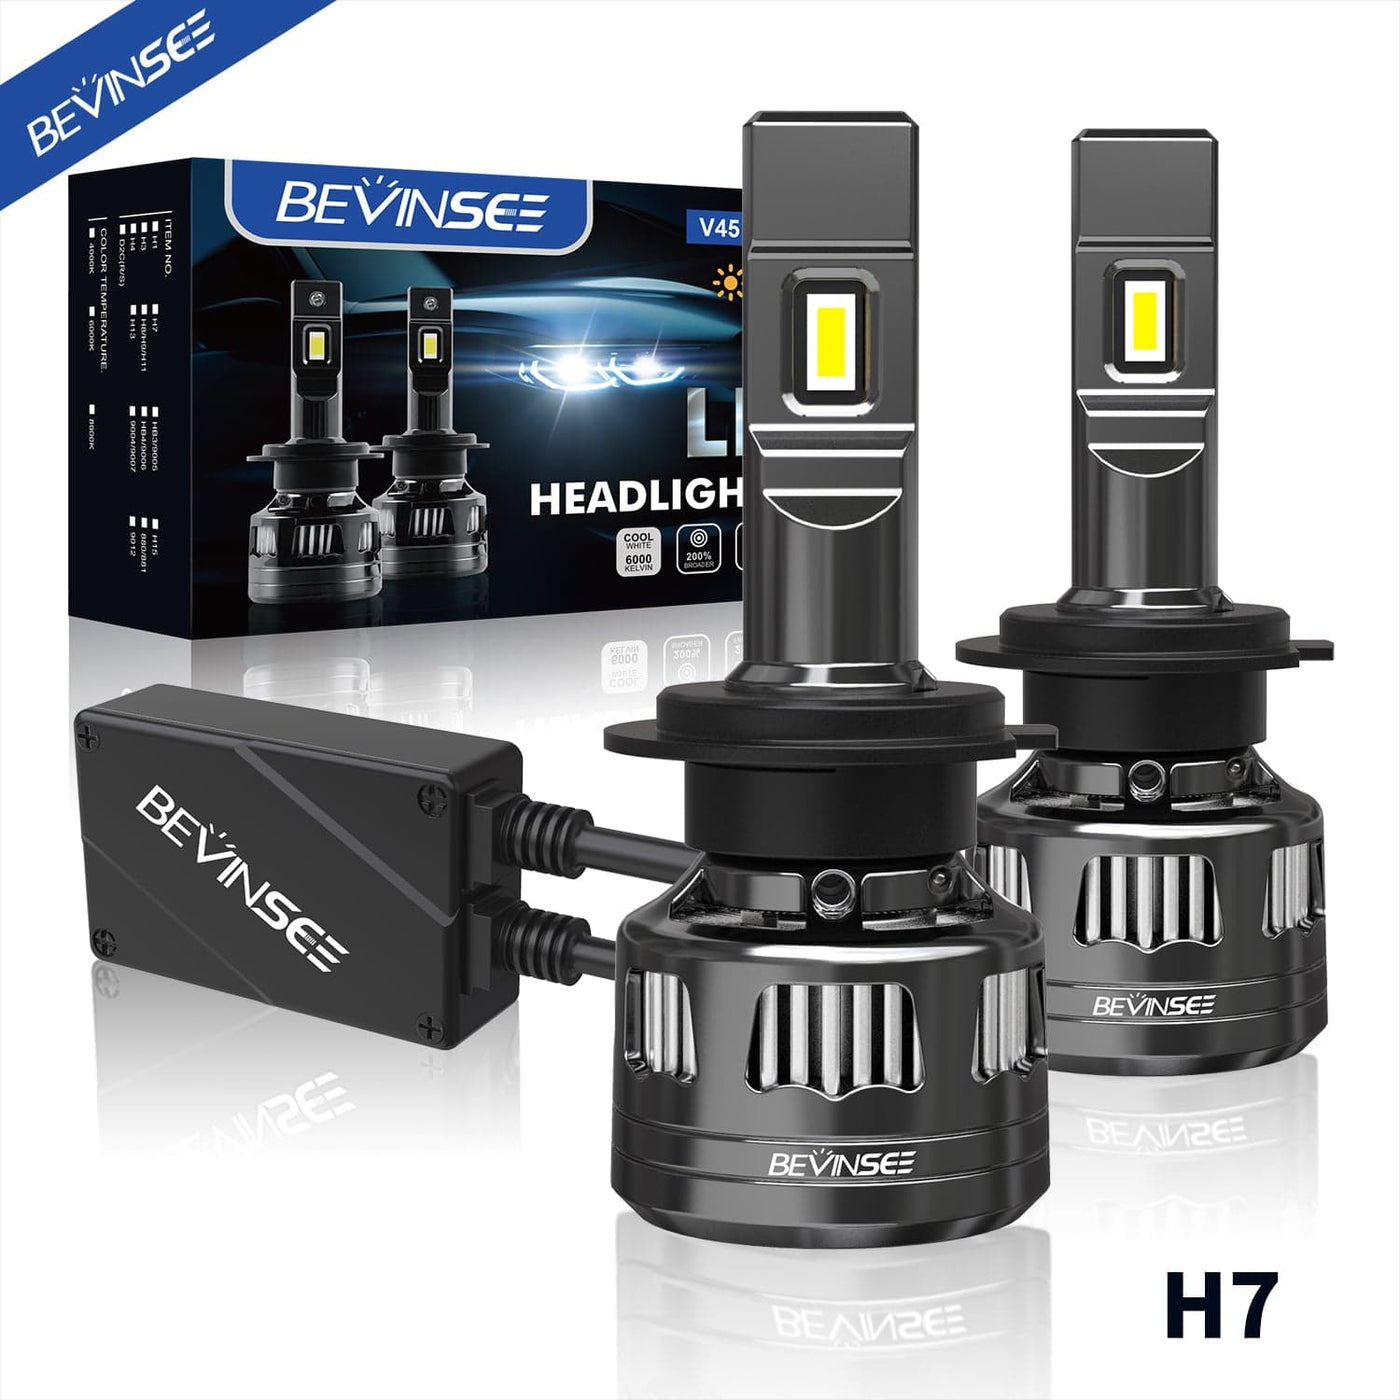 Bevinsee Best LED Headlight 120W 22000 Lumens 6000K